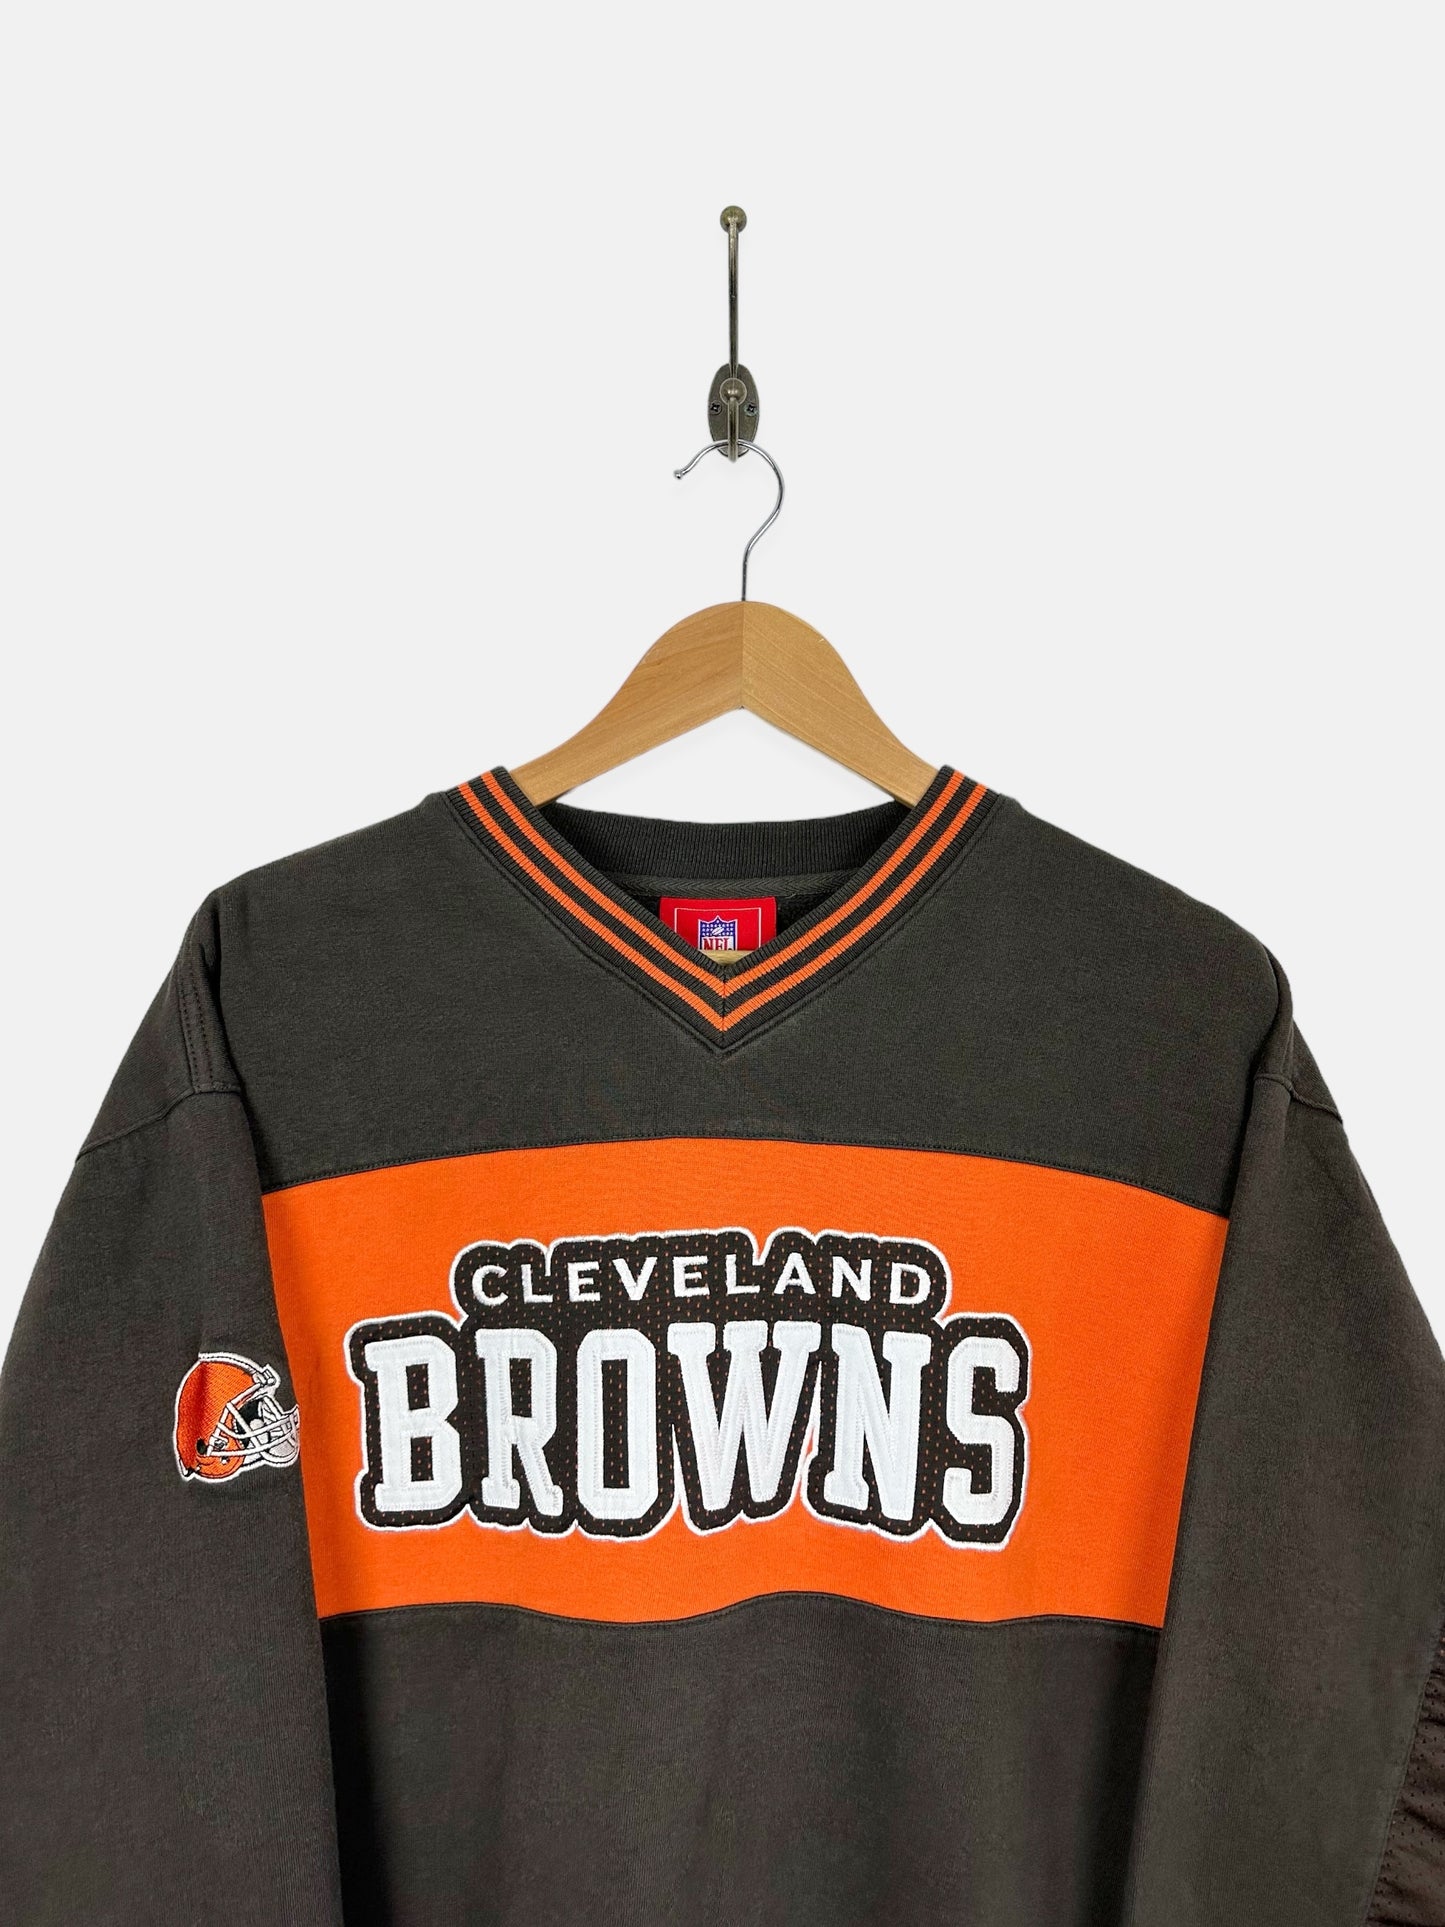 90's Cleveland Browns NFL Embroidered Vintage Sweatshirt Size M